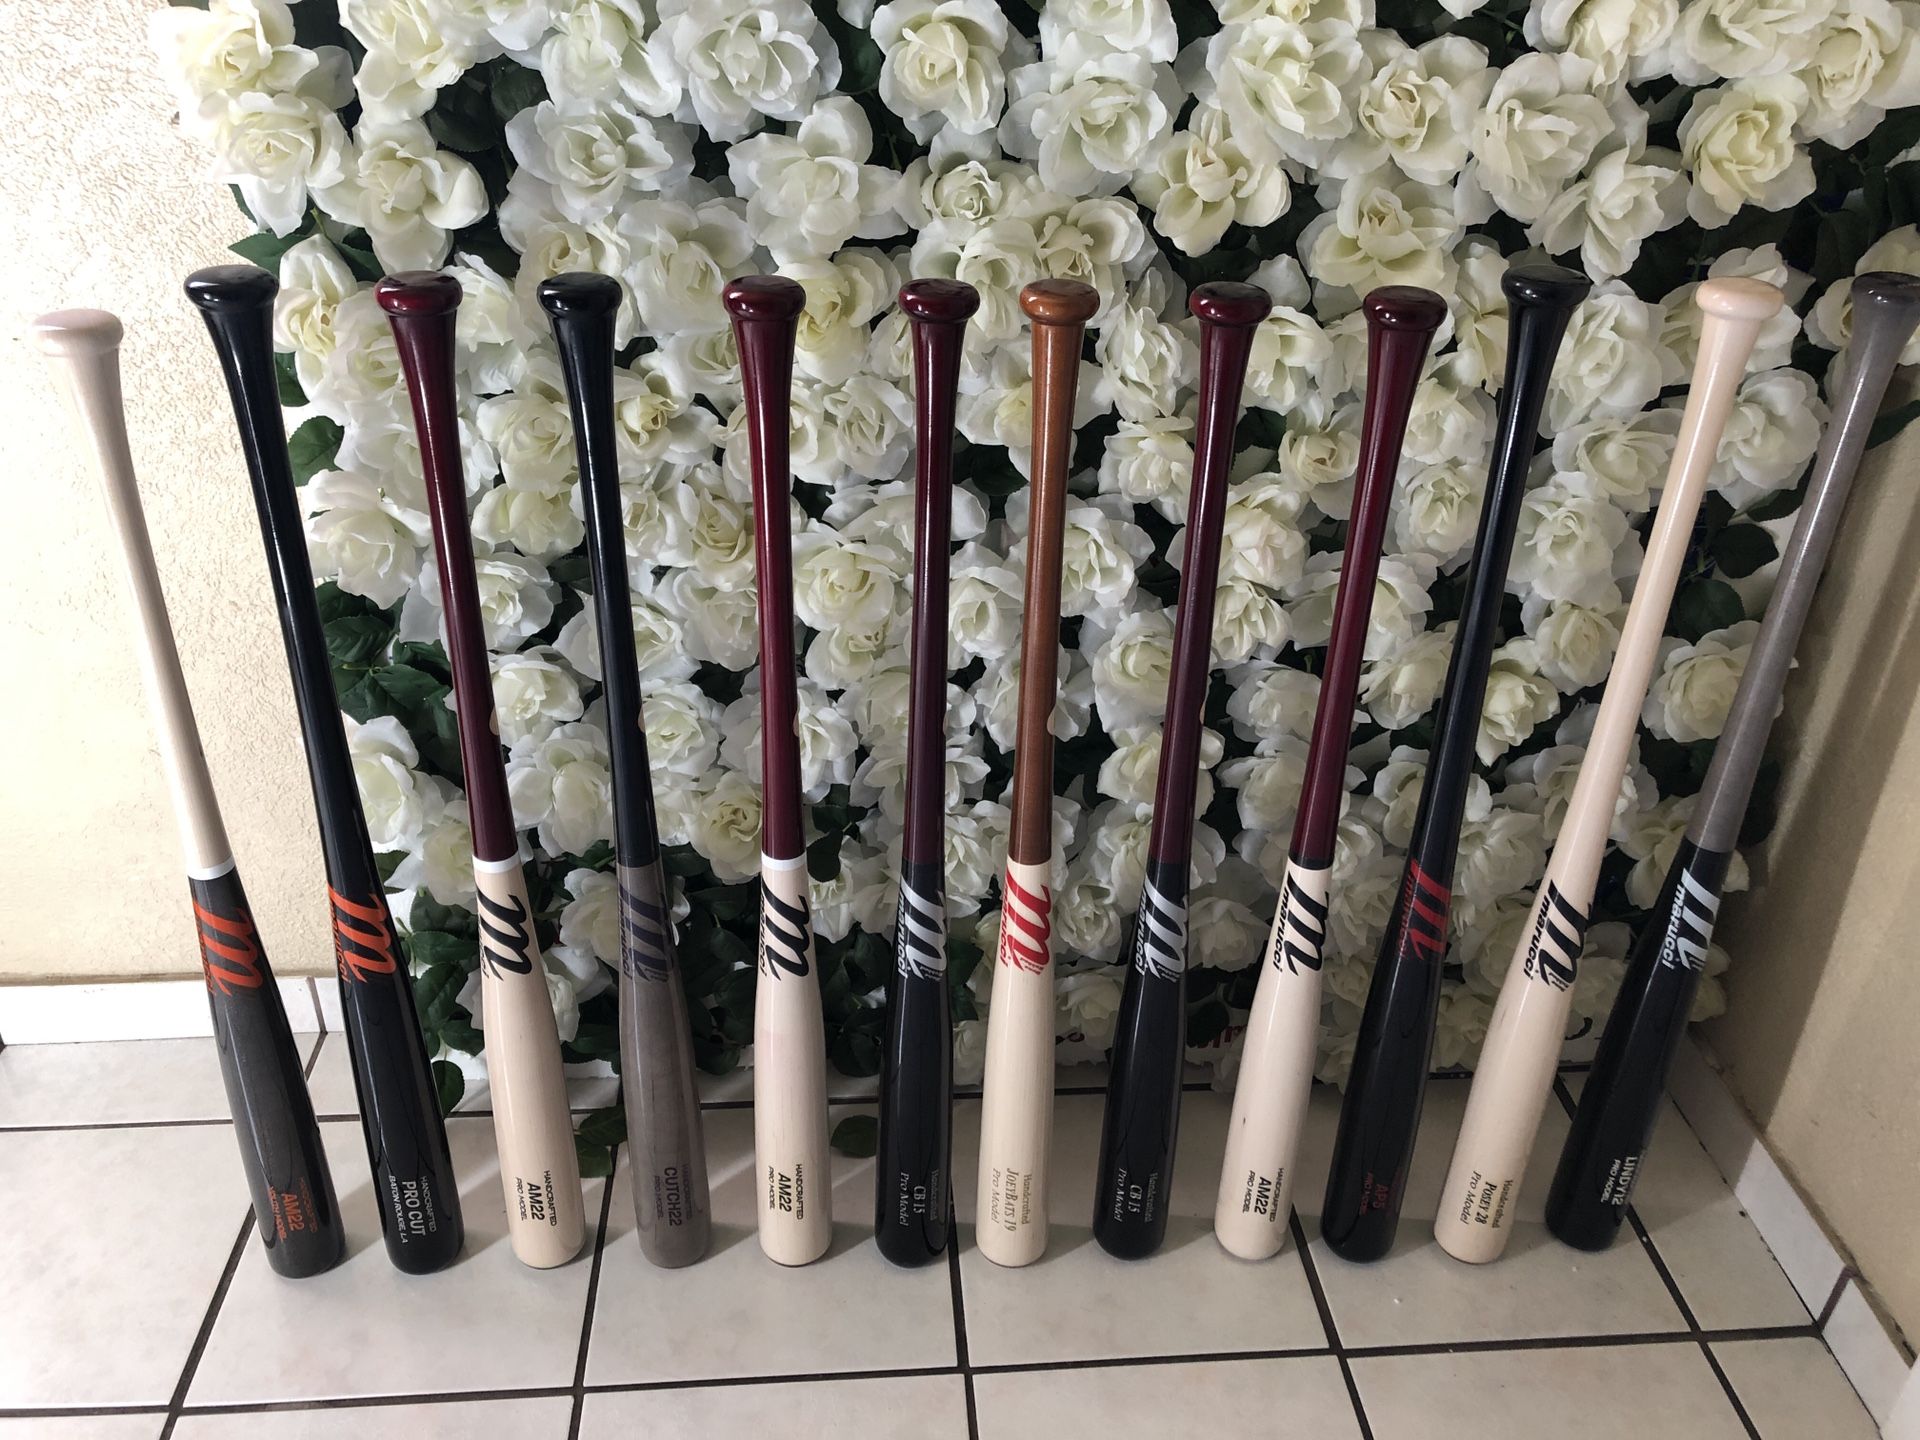 Brand new Marucci baseball bats!